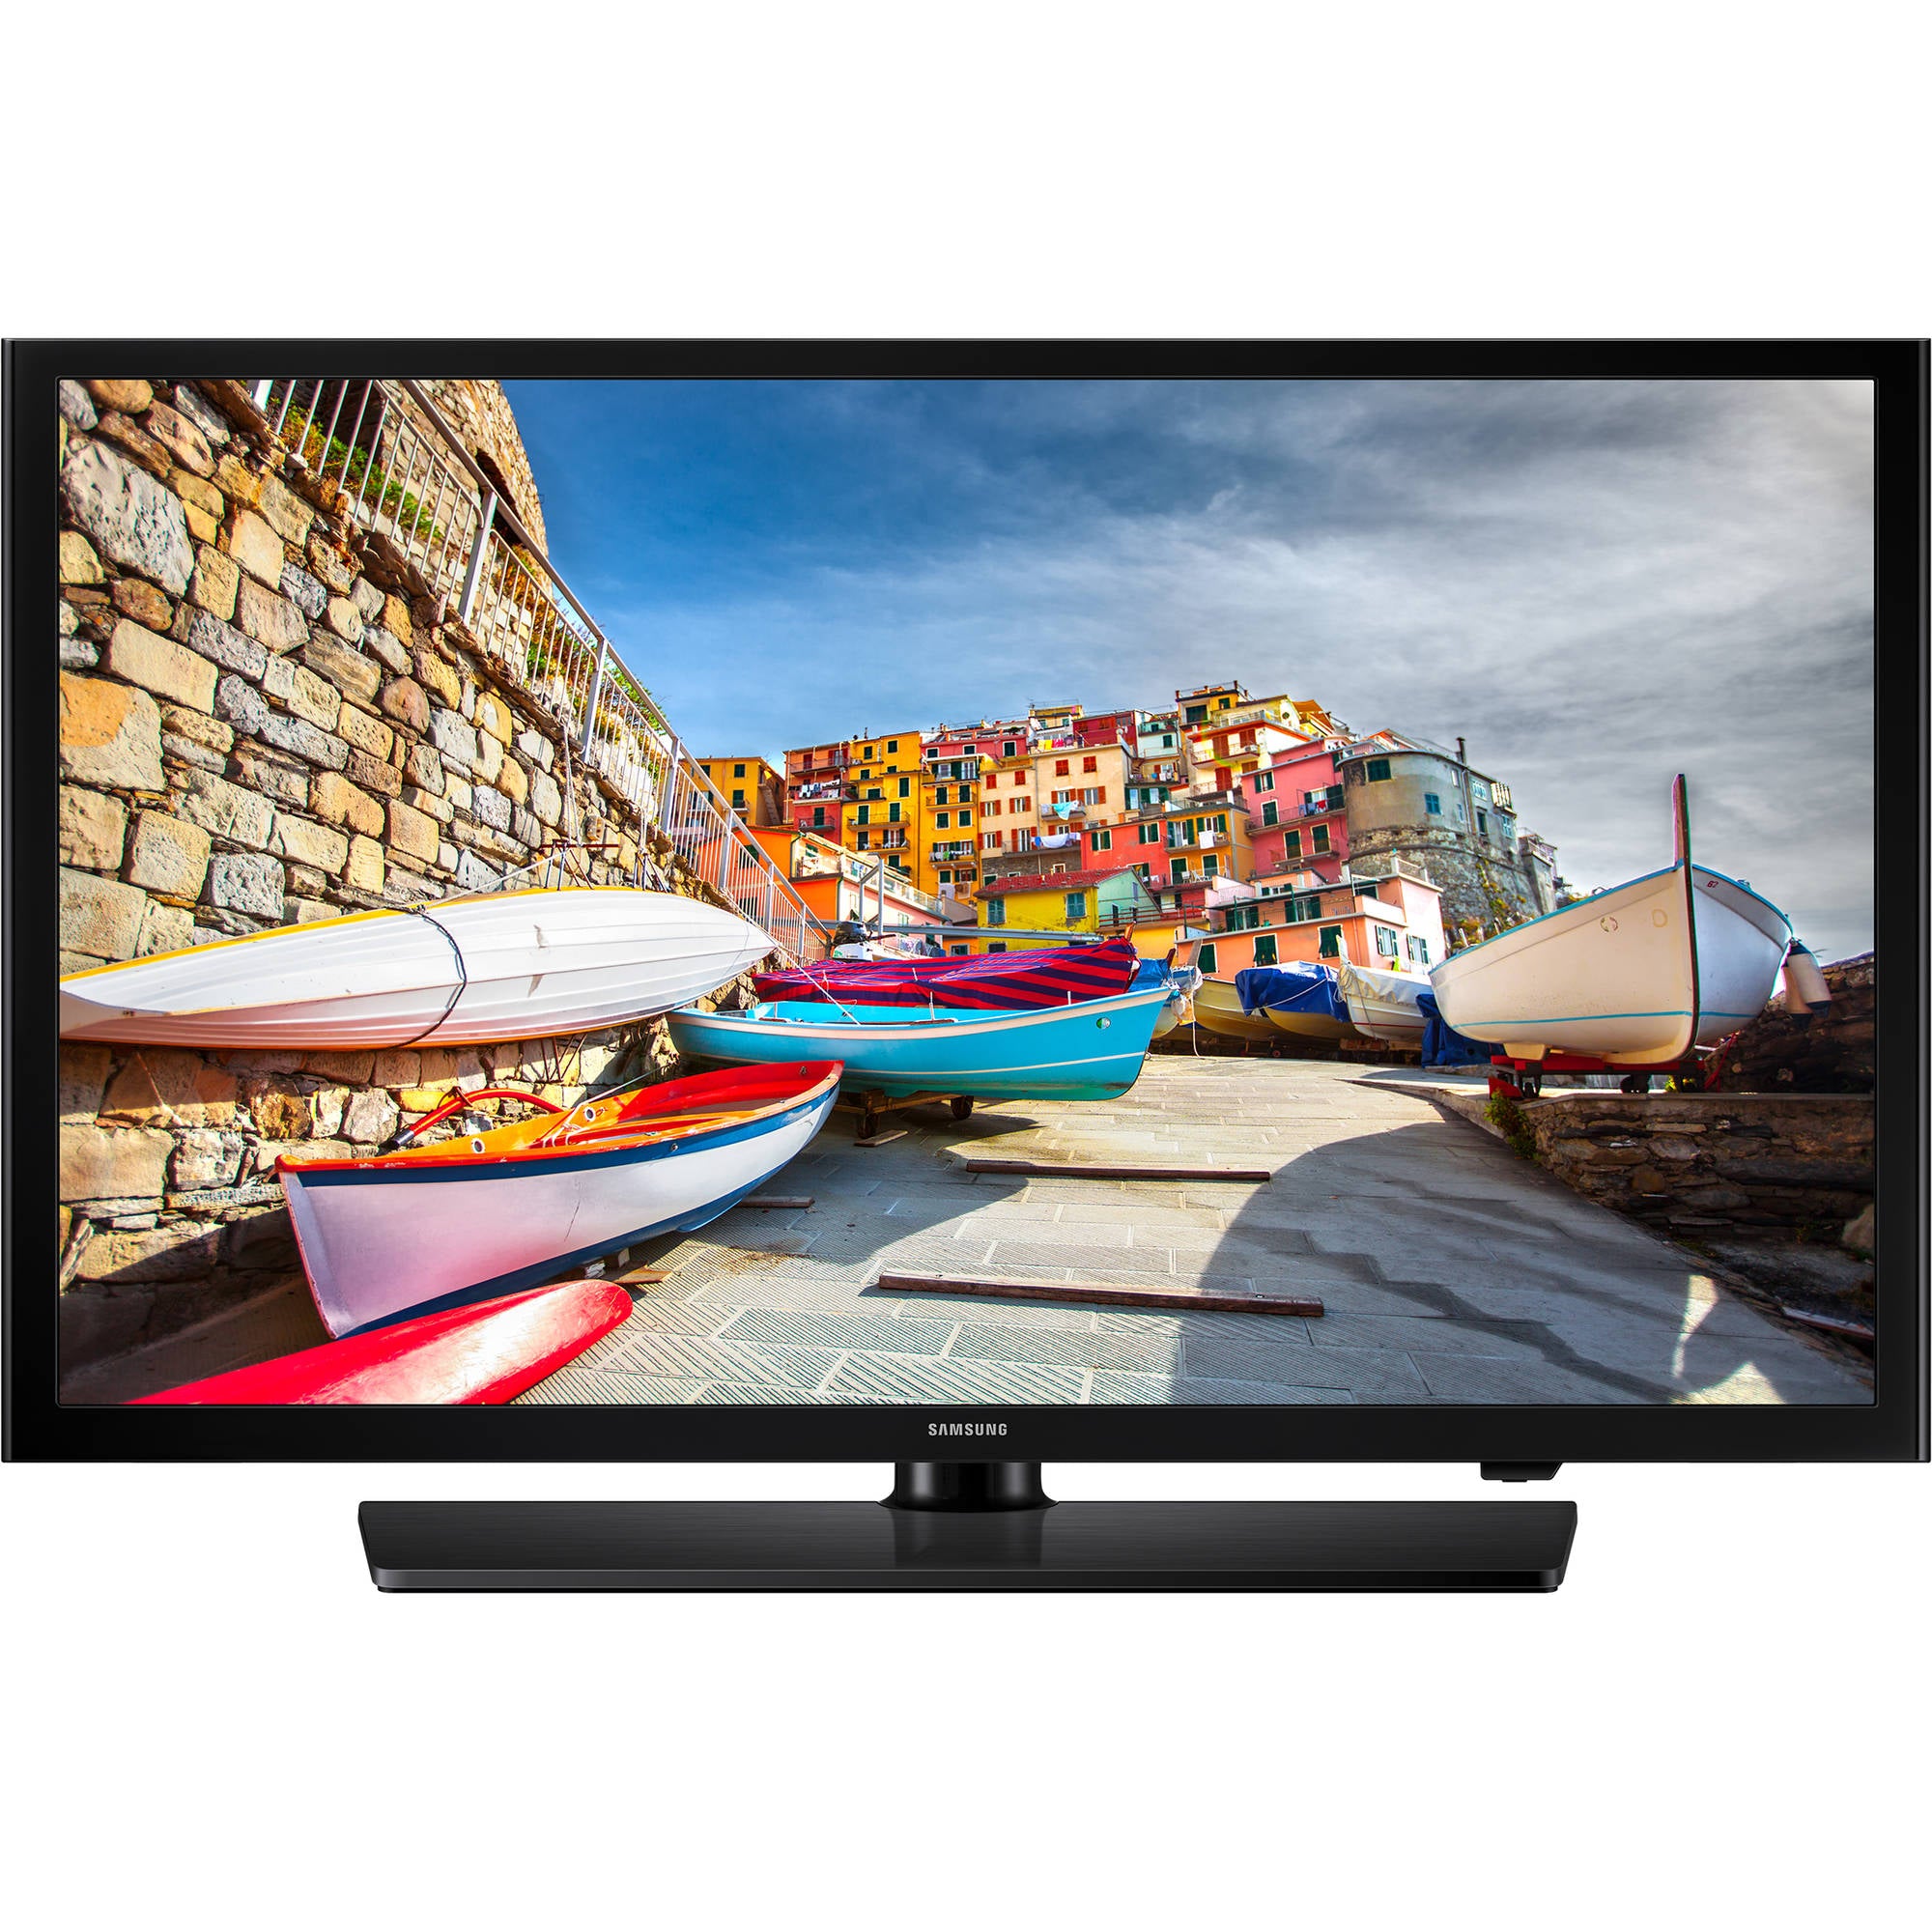 Samsung HG50NE470SFXZA 470 Series 50" Full HD Hospitality TV (Black) - Samsung Parts USA